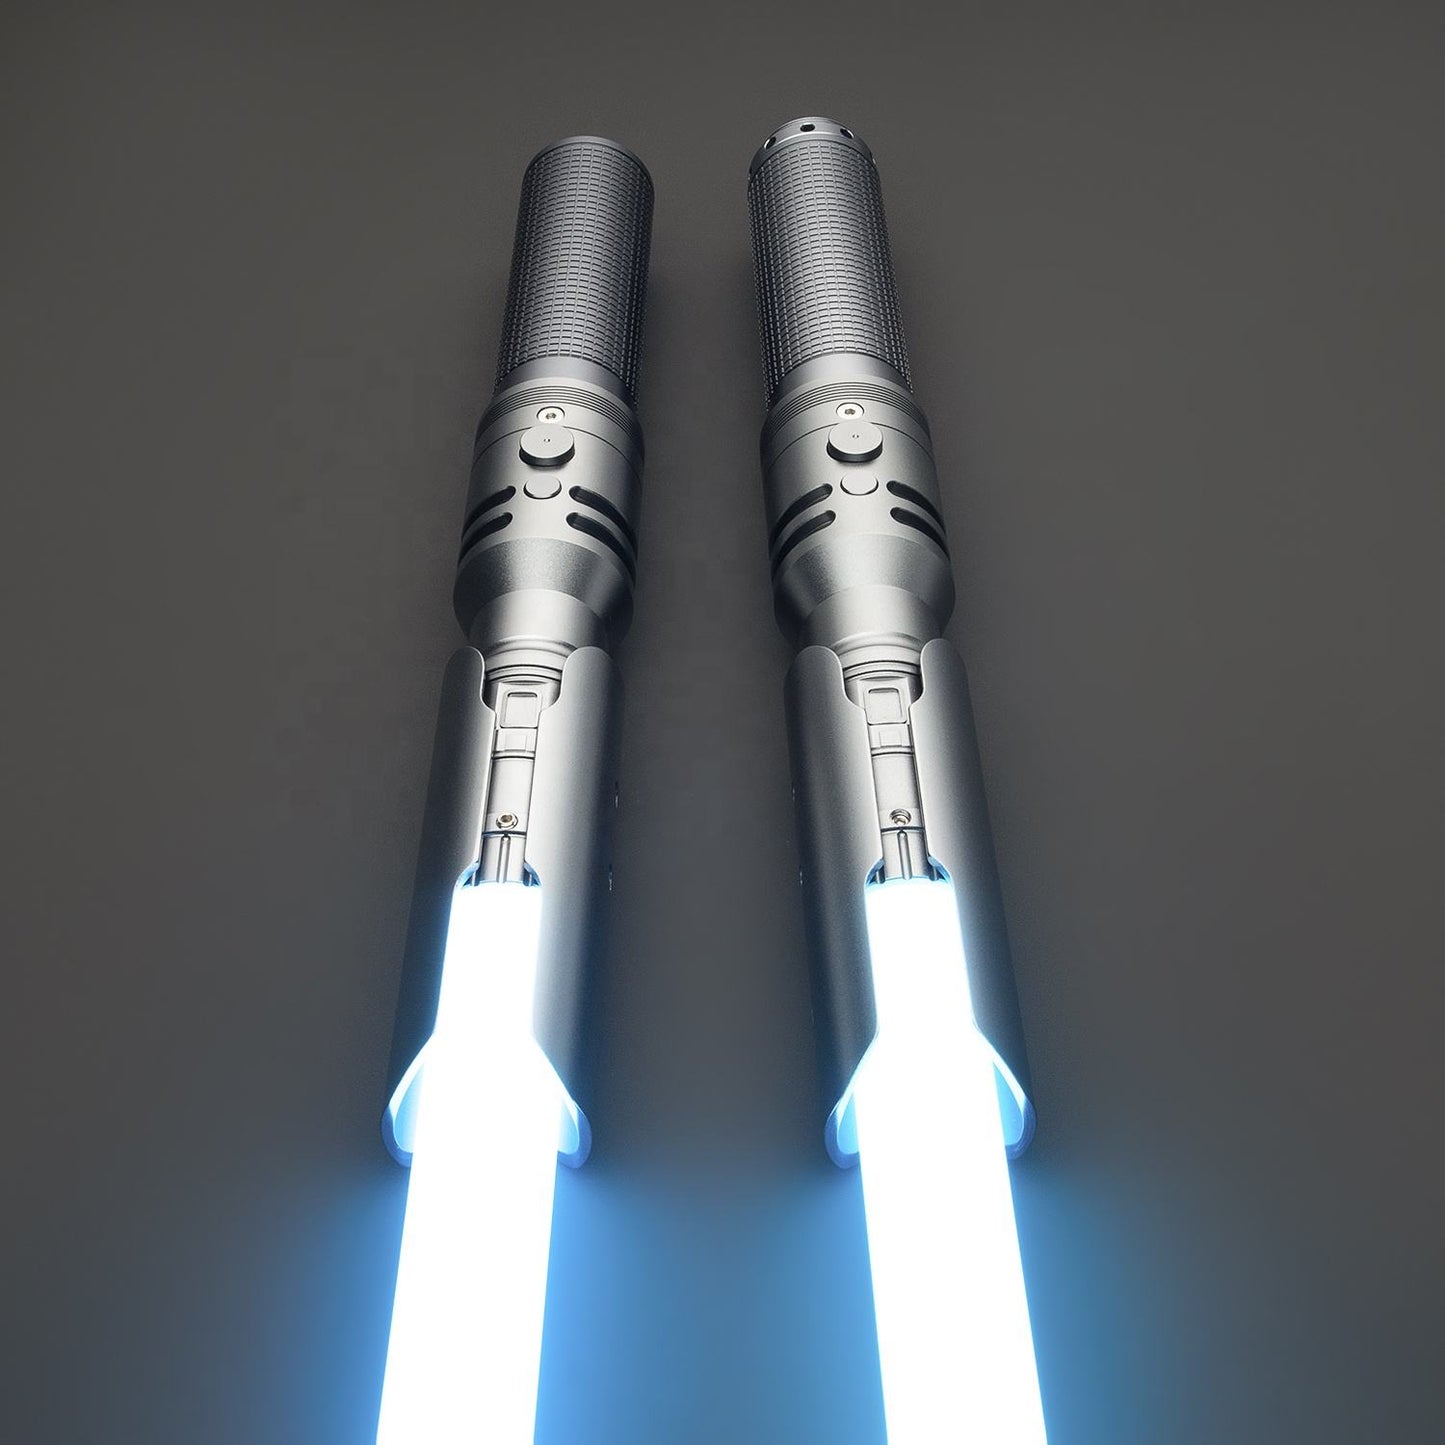 Fallen Order Flashing Double Light saber toy - Dupengda